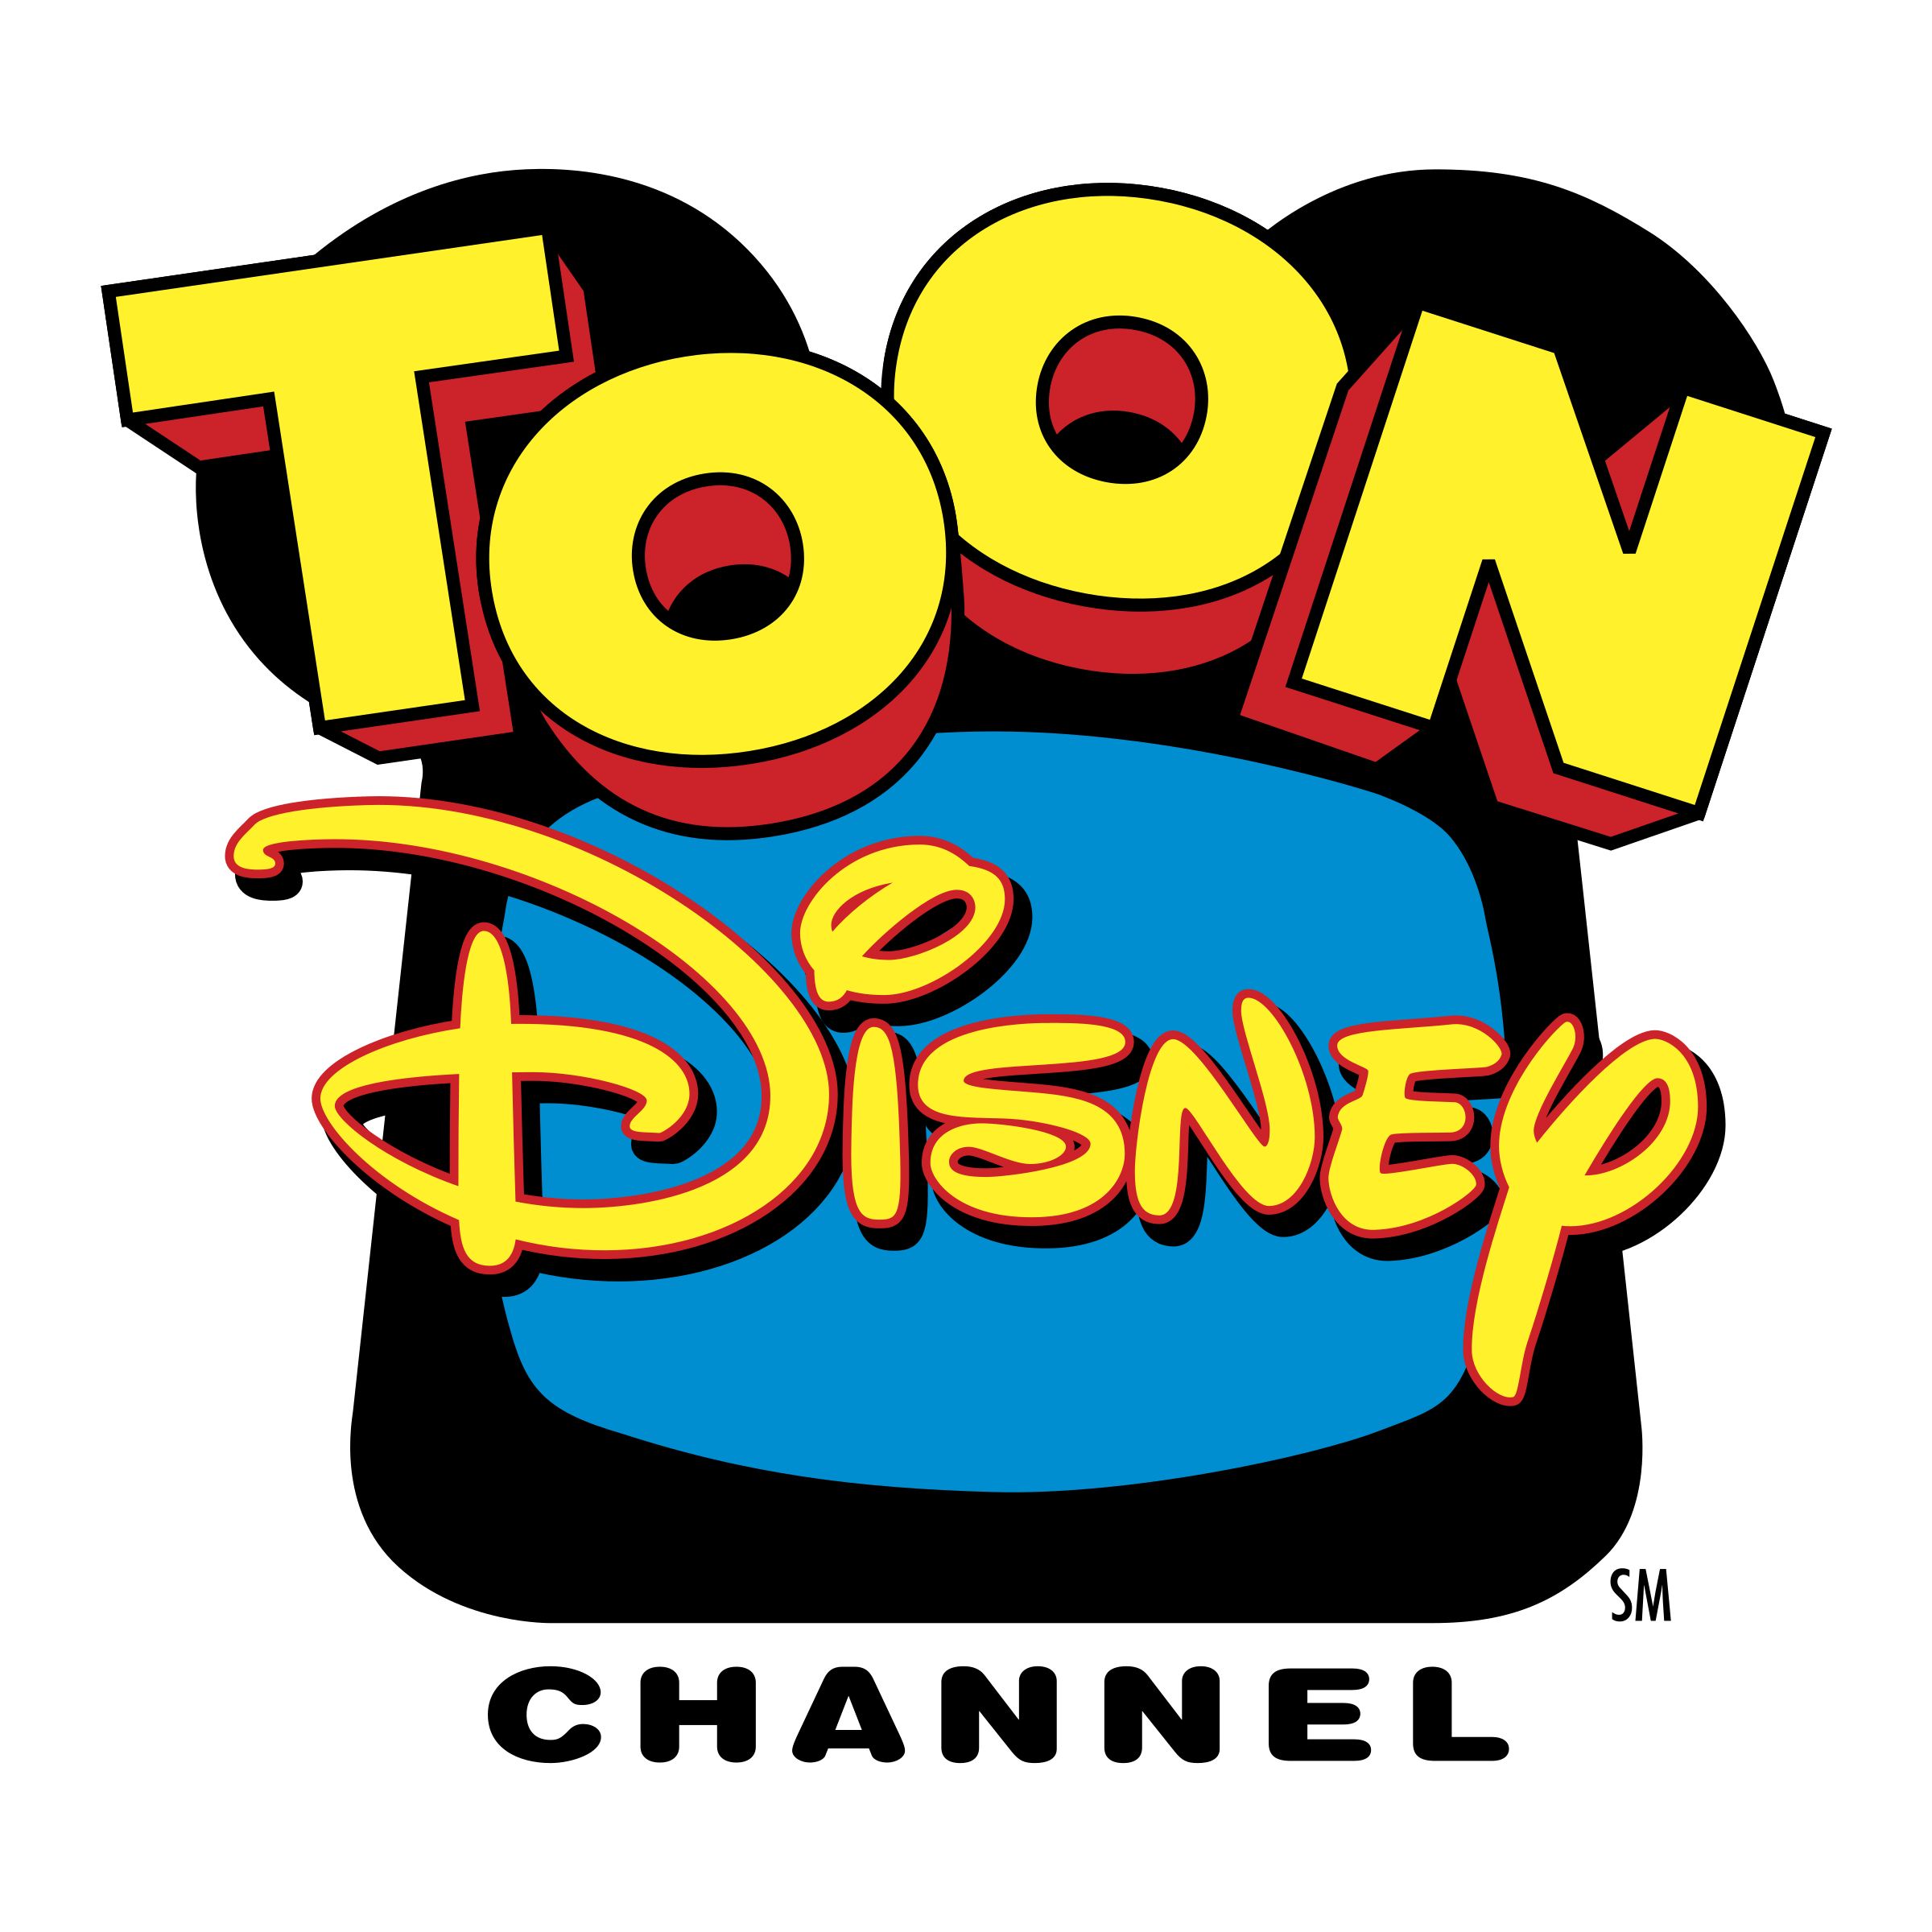 Toon Disney Logo - Toon Disney Channel Logo PNG Transparent & SVG Vector - Freebie Supply